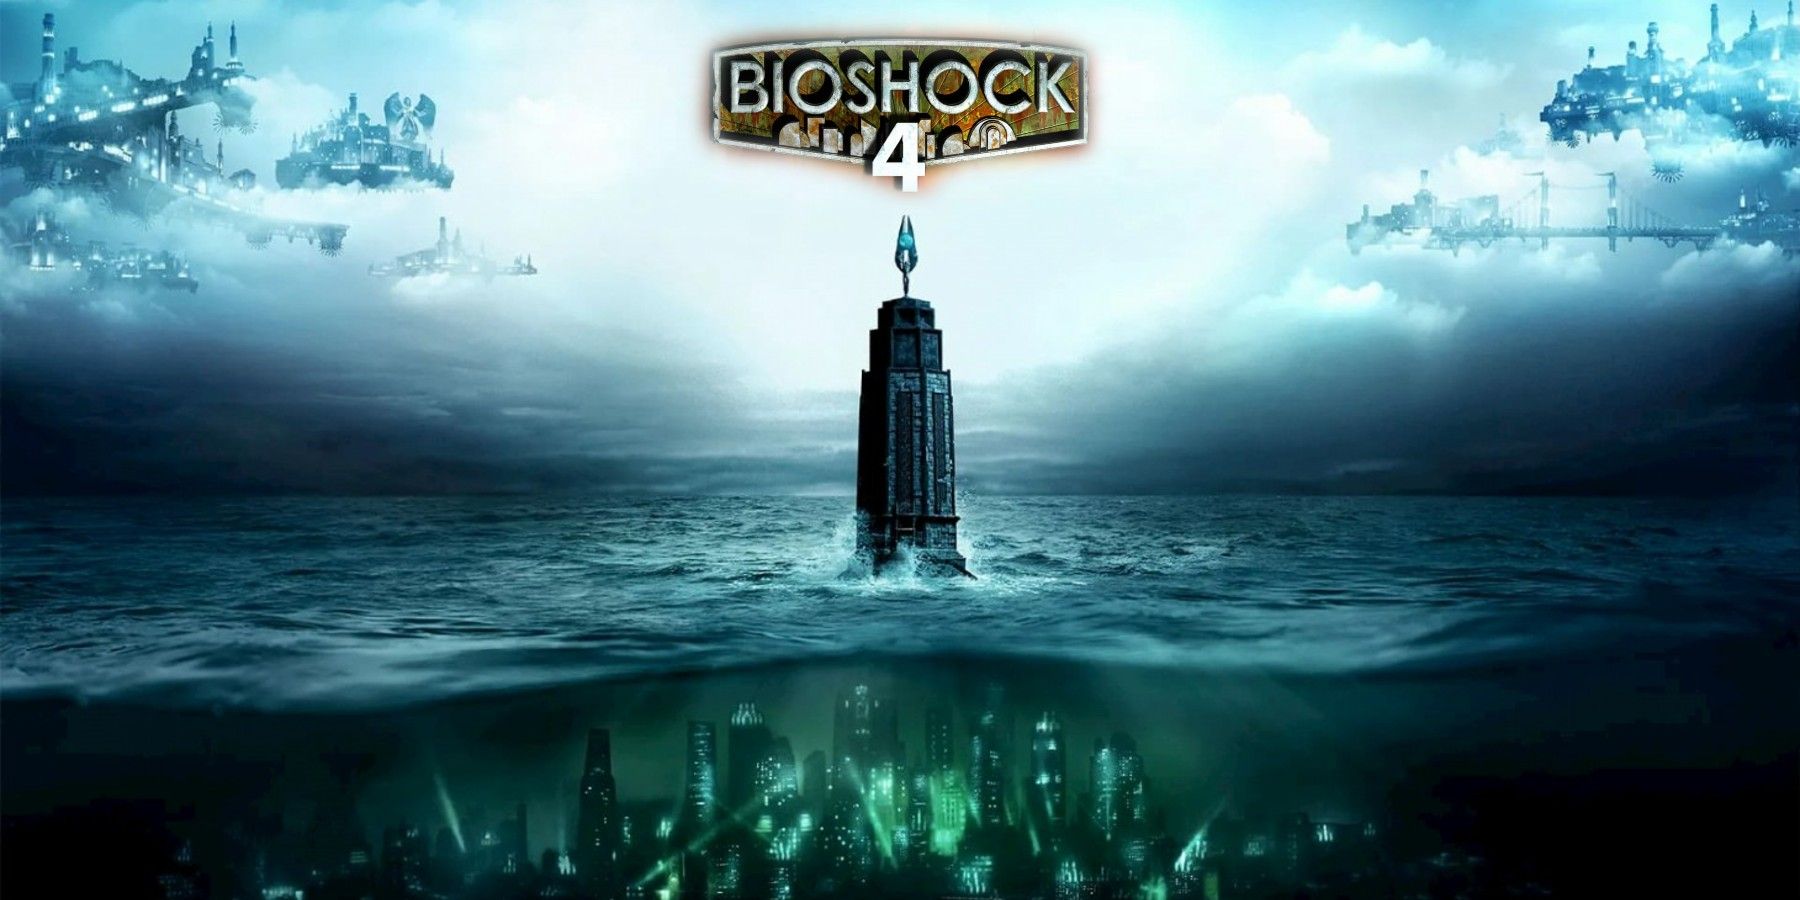 bioshock-4-nihilism-philosophy-threat